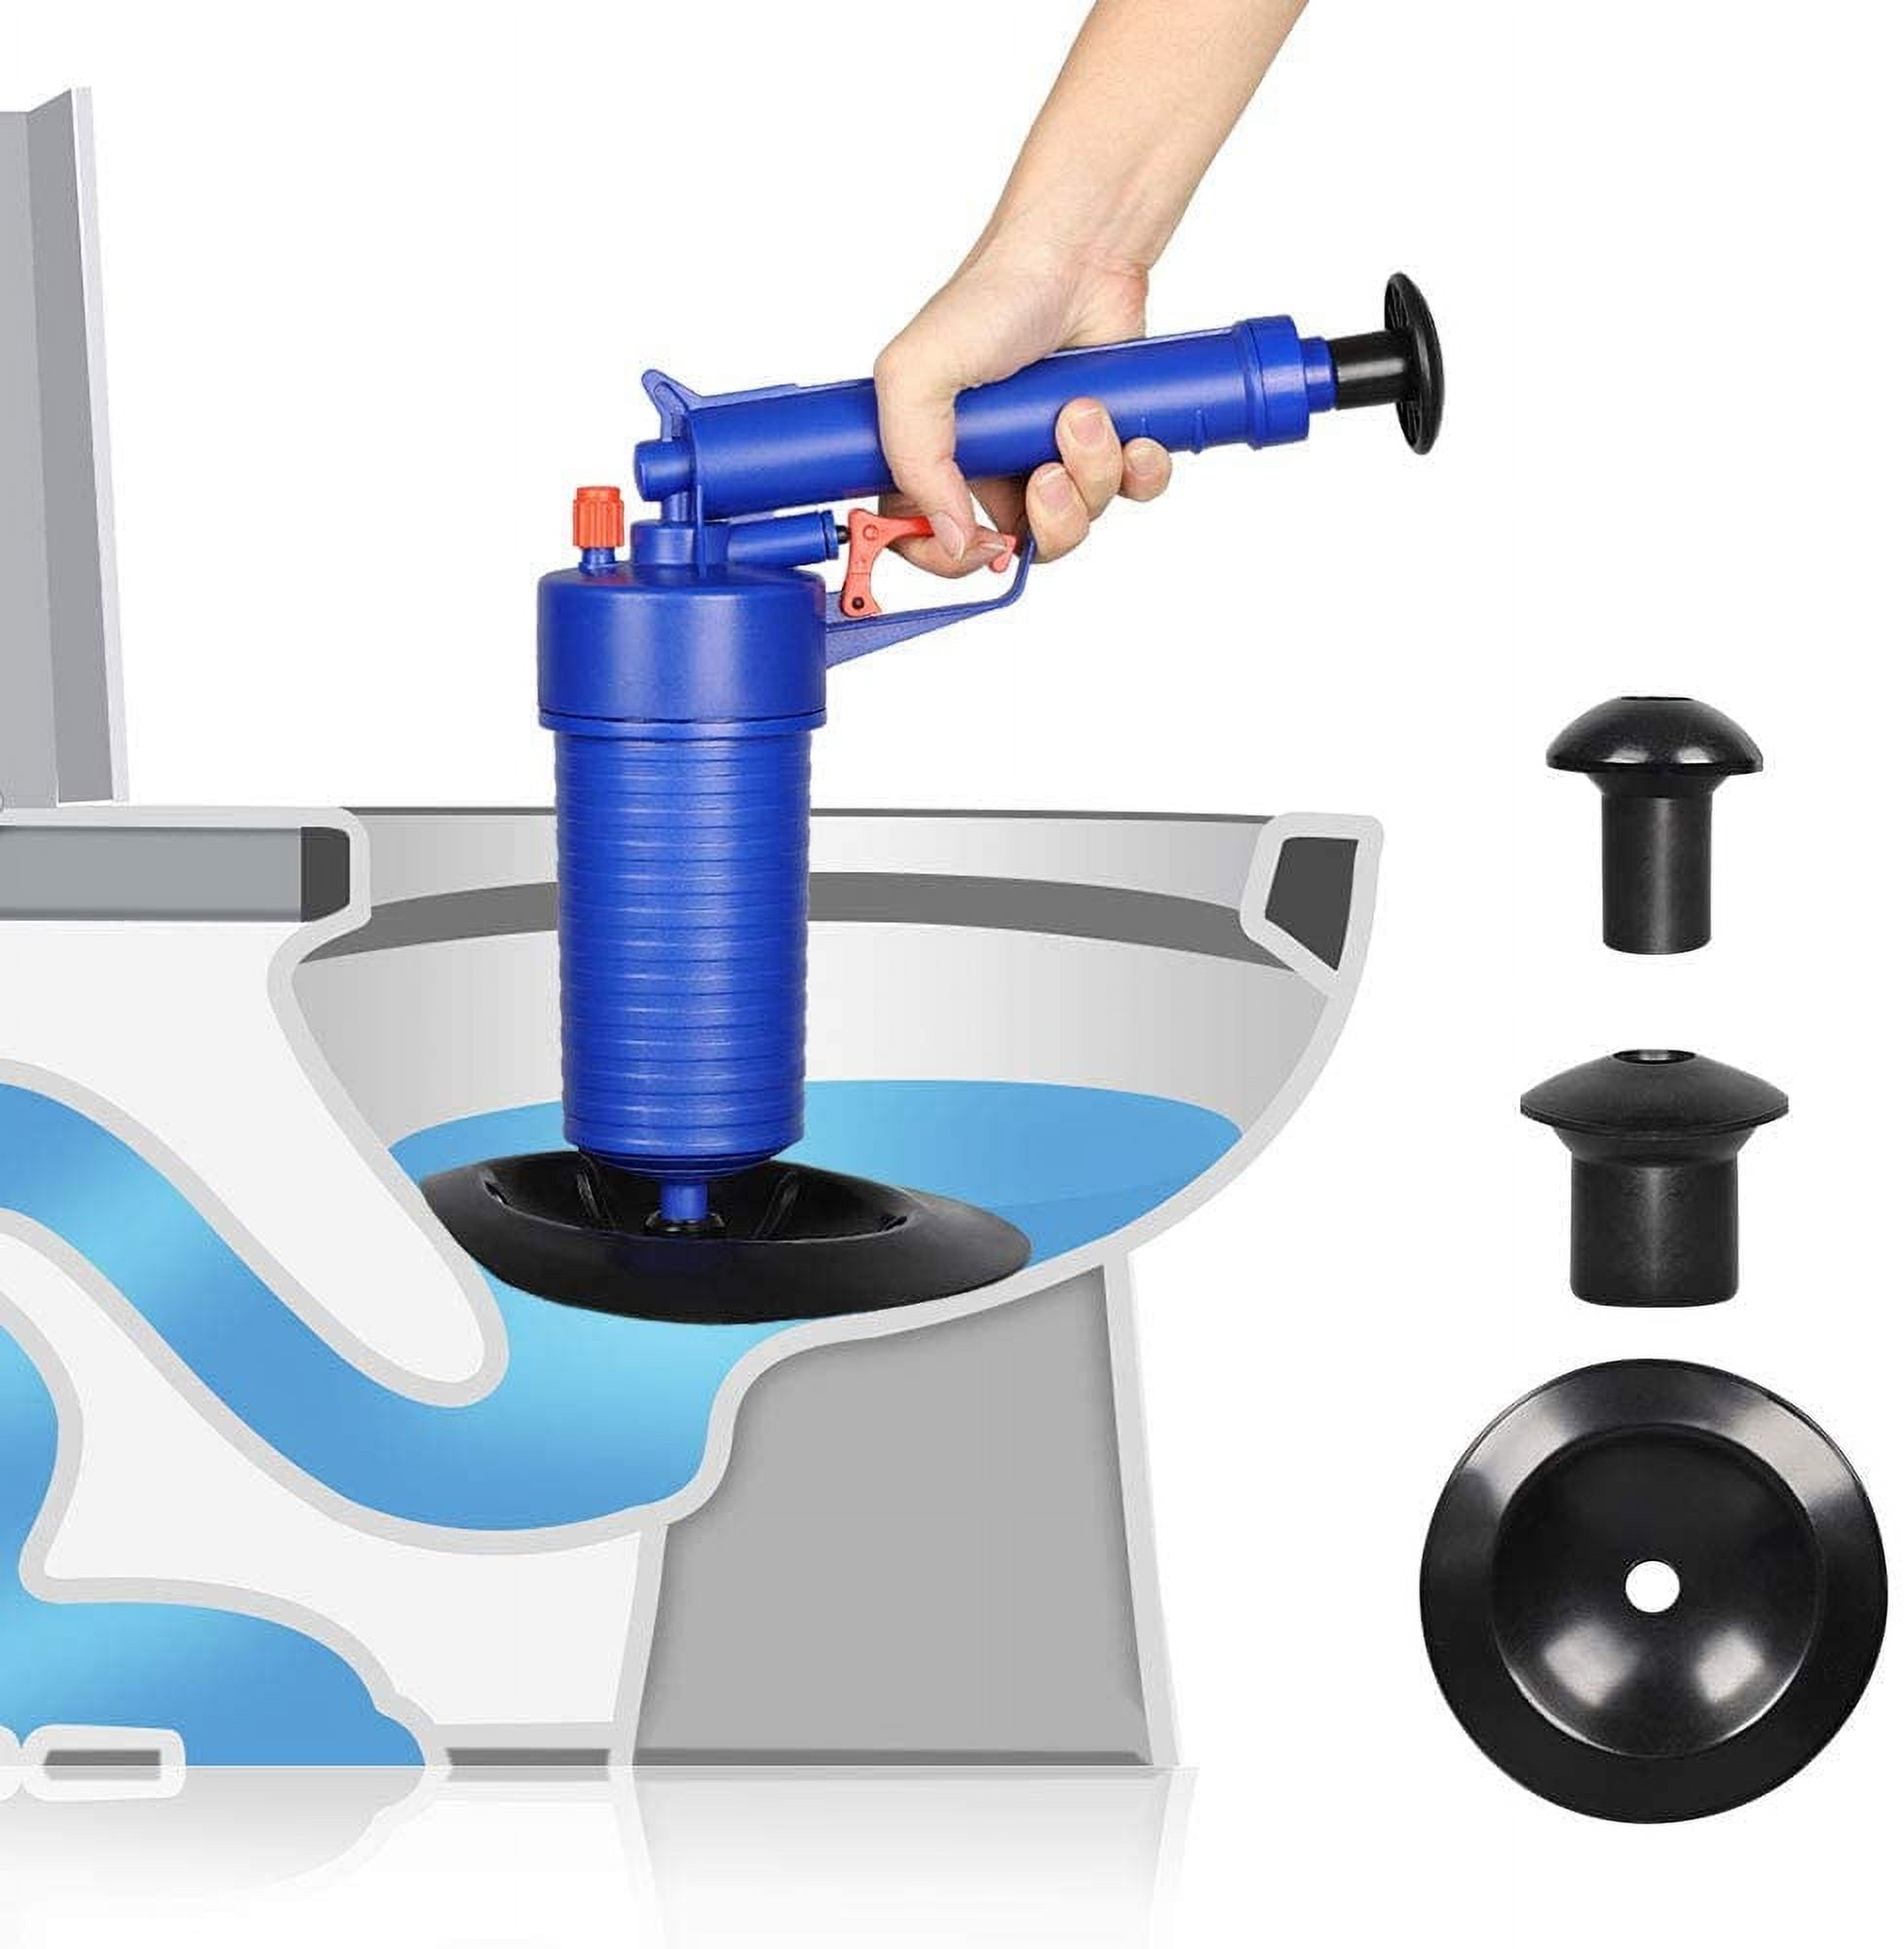 Toilet Plunger,air Drain Blaster Drain Clog Remover, Drain Tub Drain Cleaner  Opener Pump For Toilets, Sink